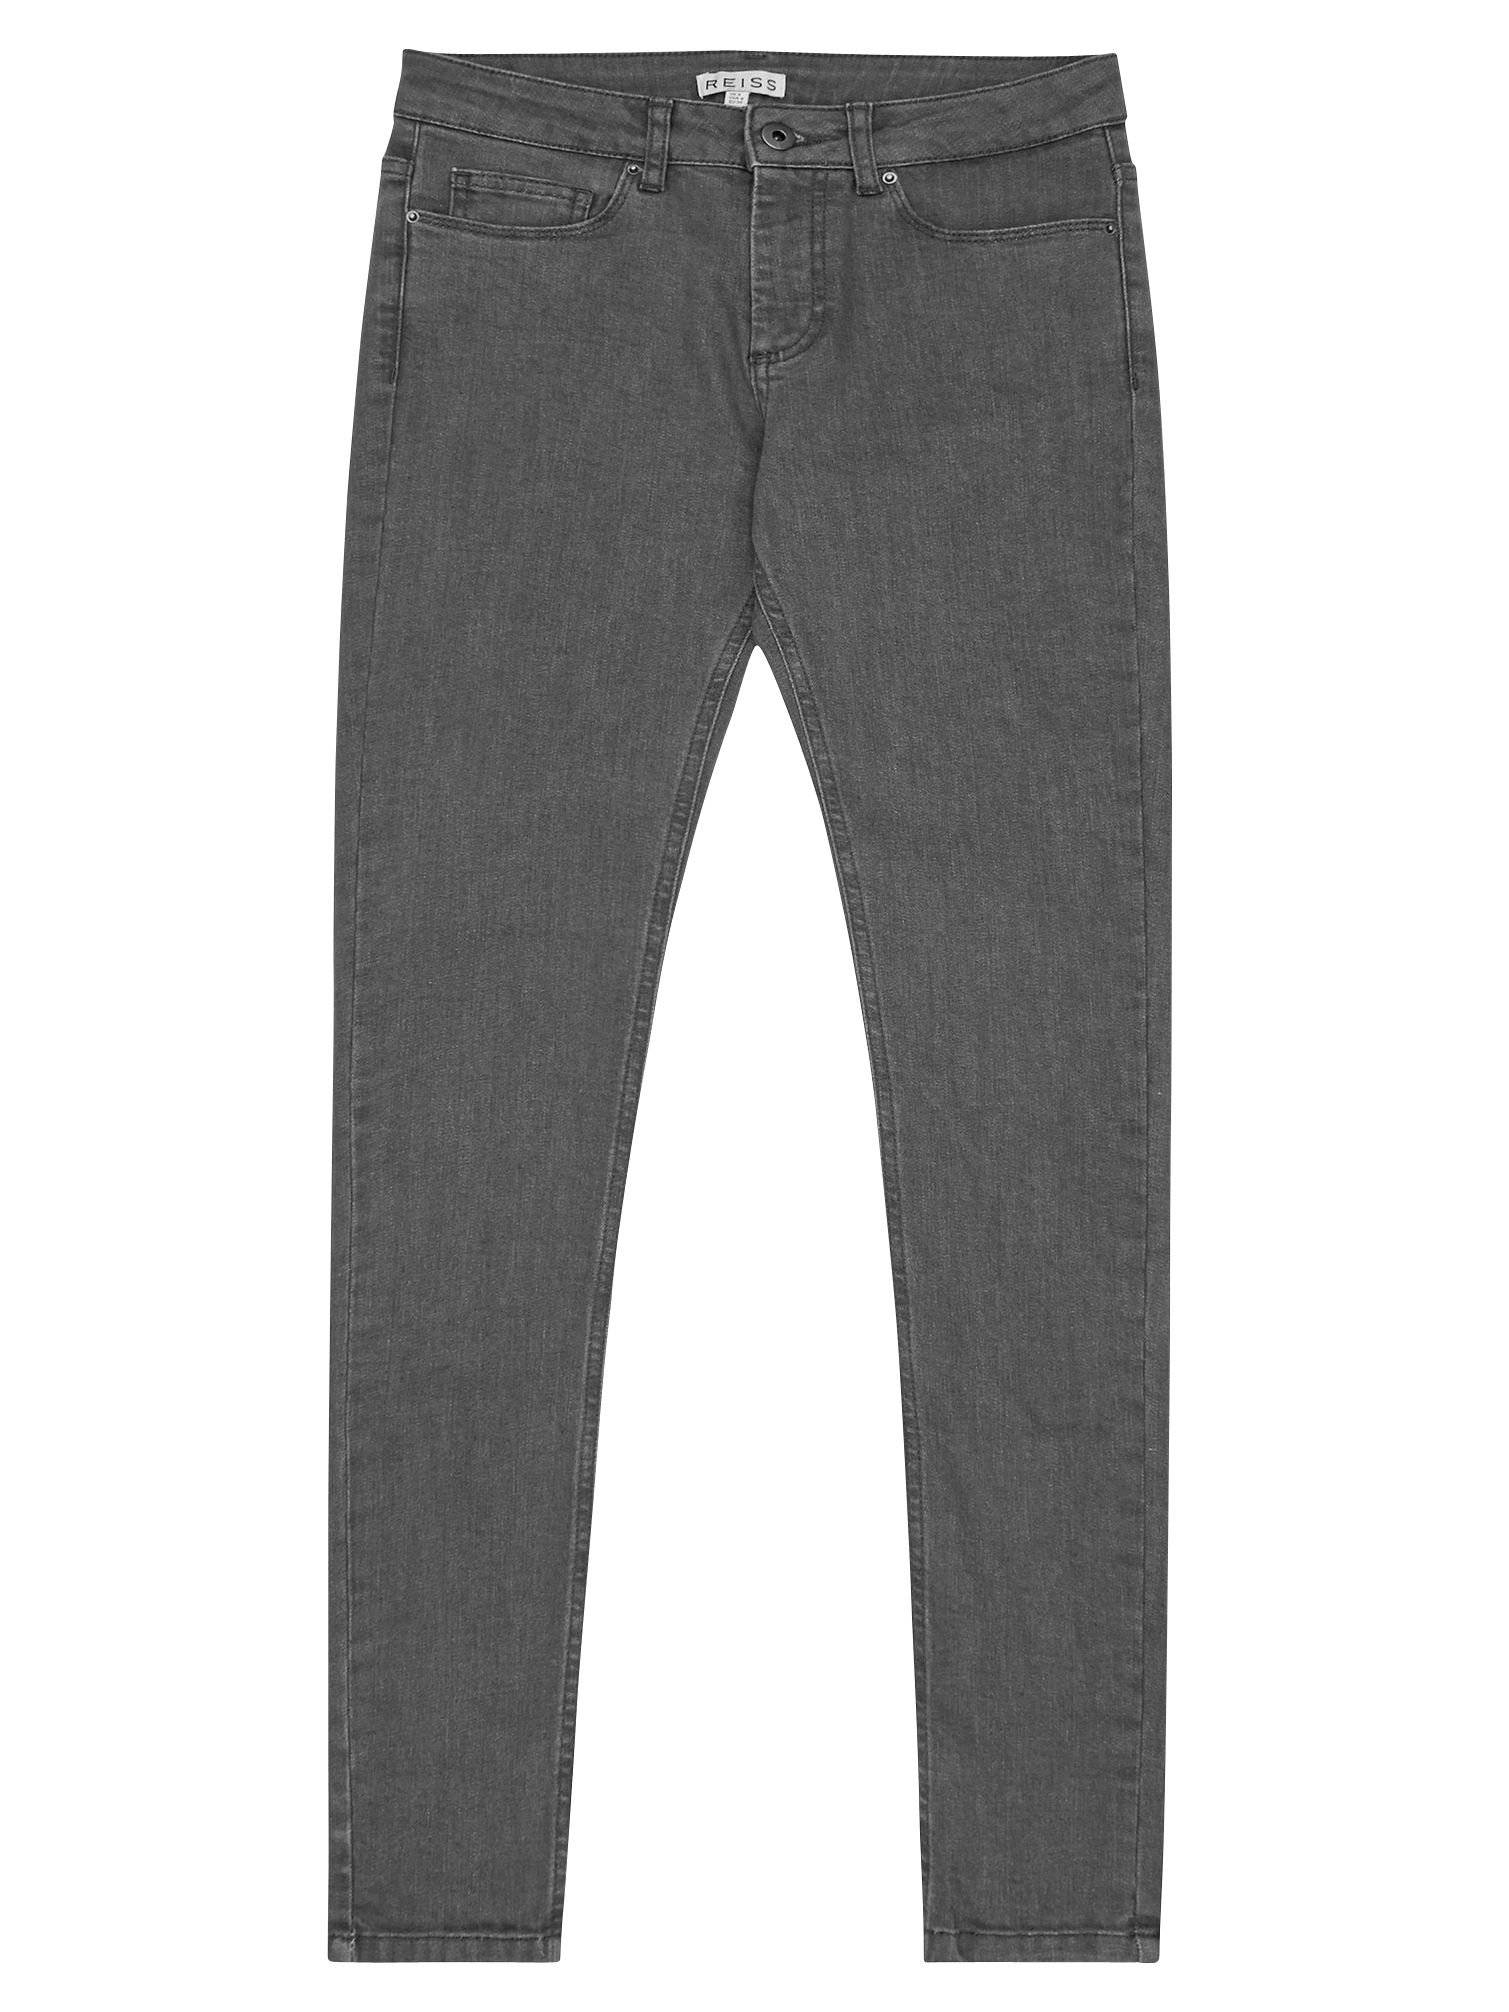 reiss grey jeans